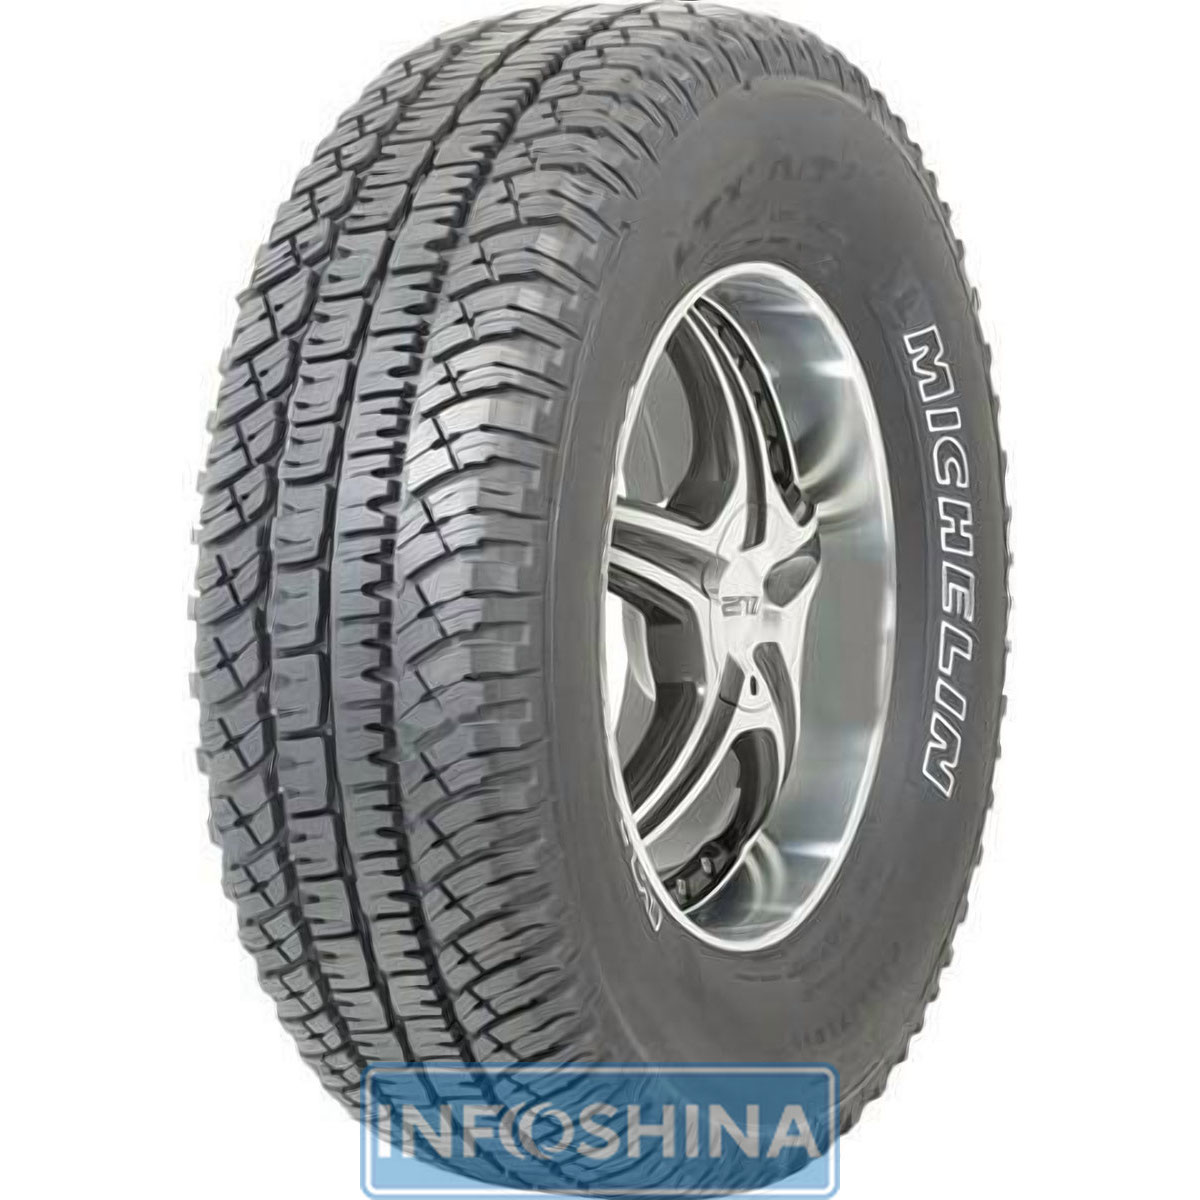 Купить шины Michelin LTX A/T2 285/65 R18 125/122R